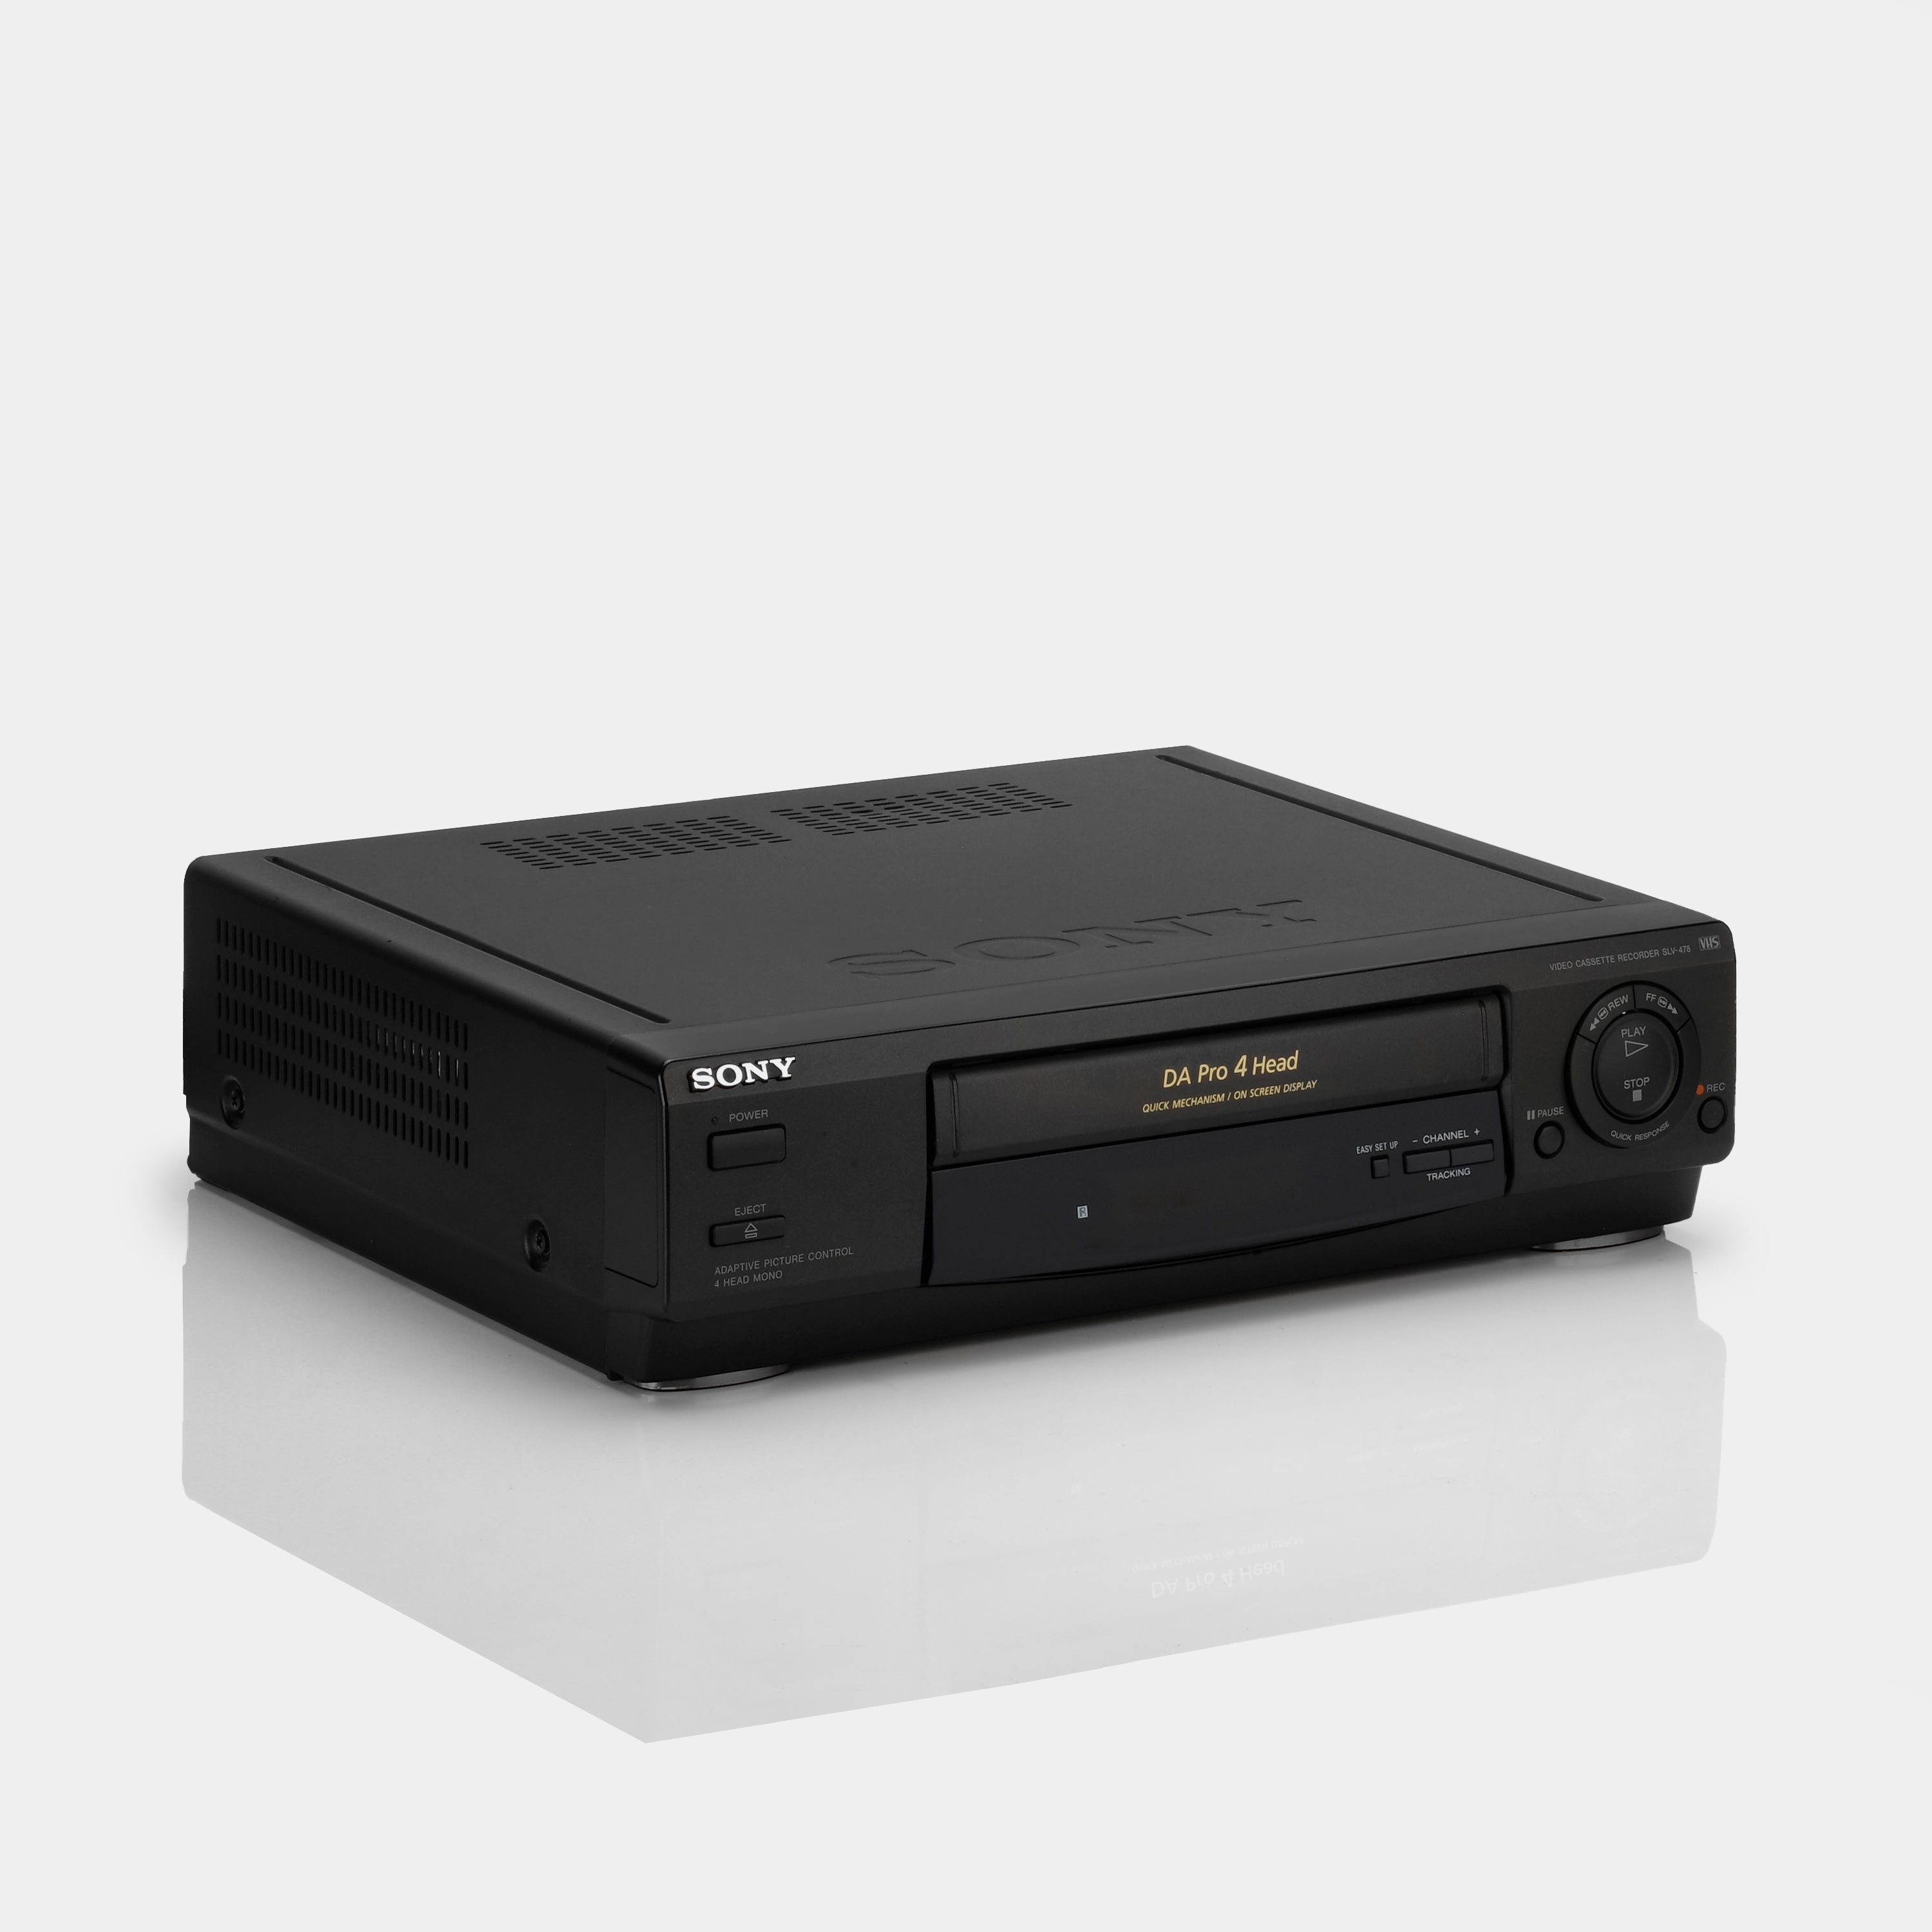 Sony SLV-478 VCR VHS Player